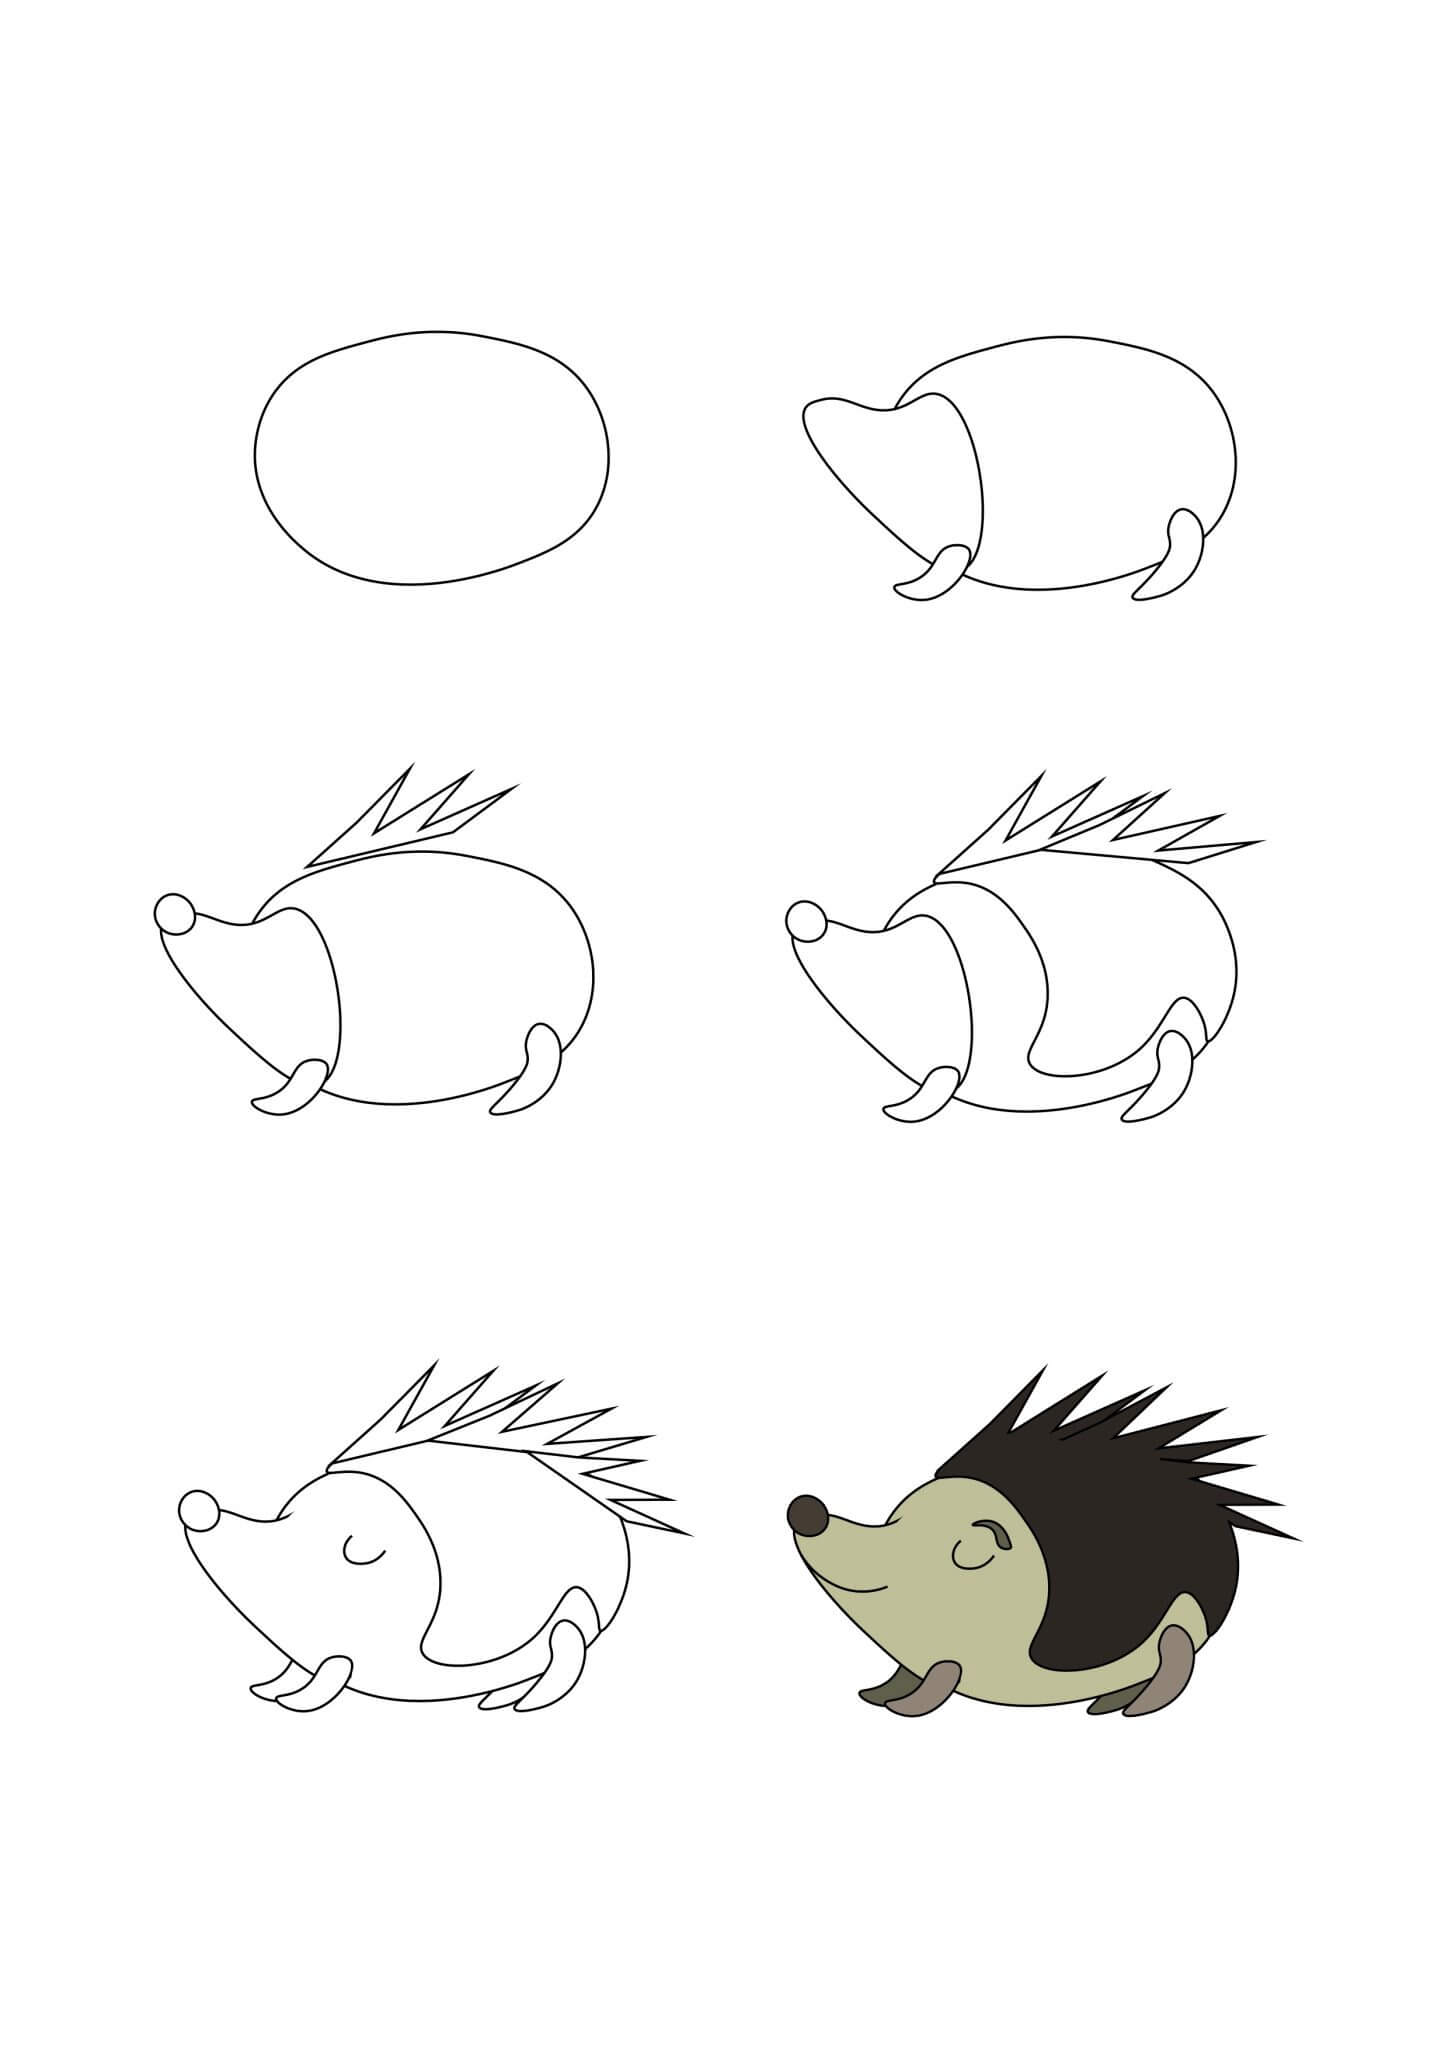 A Hedgehog - Idea 10 Drawing Ideas